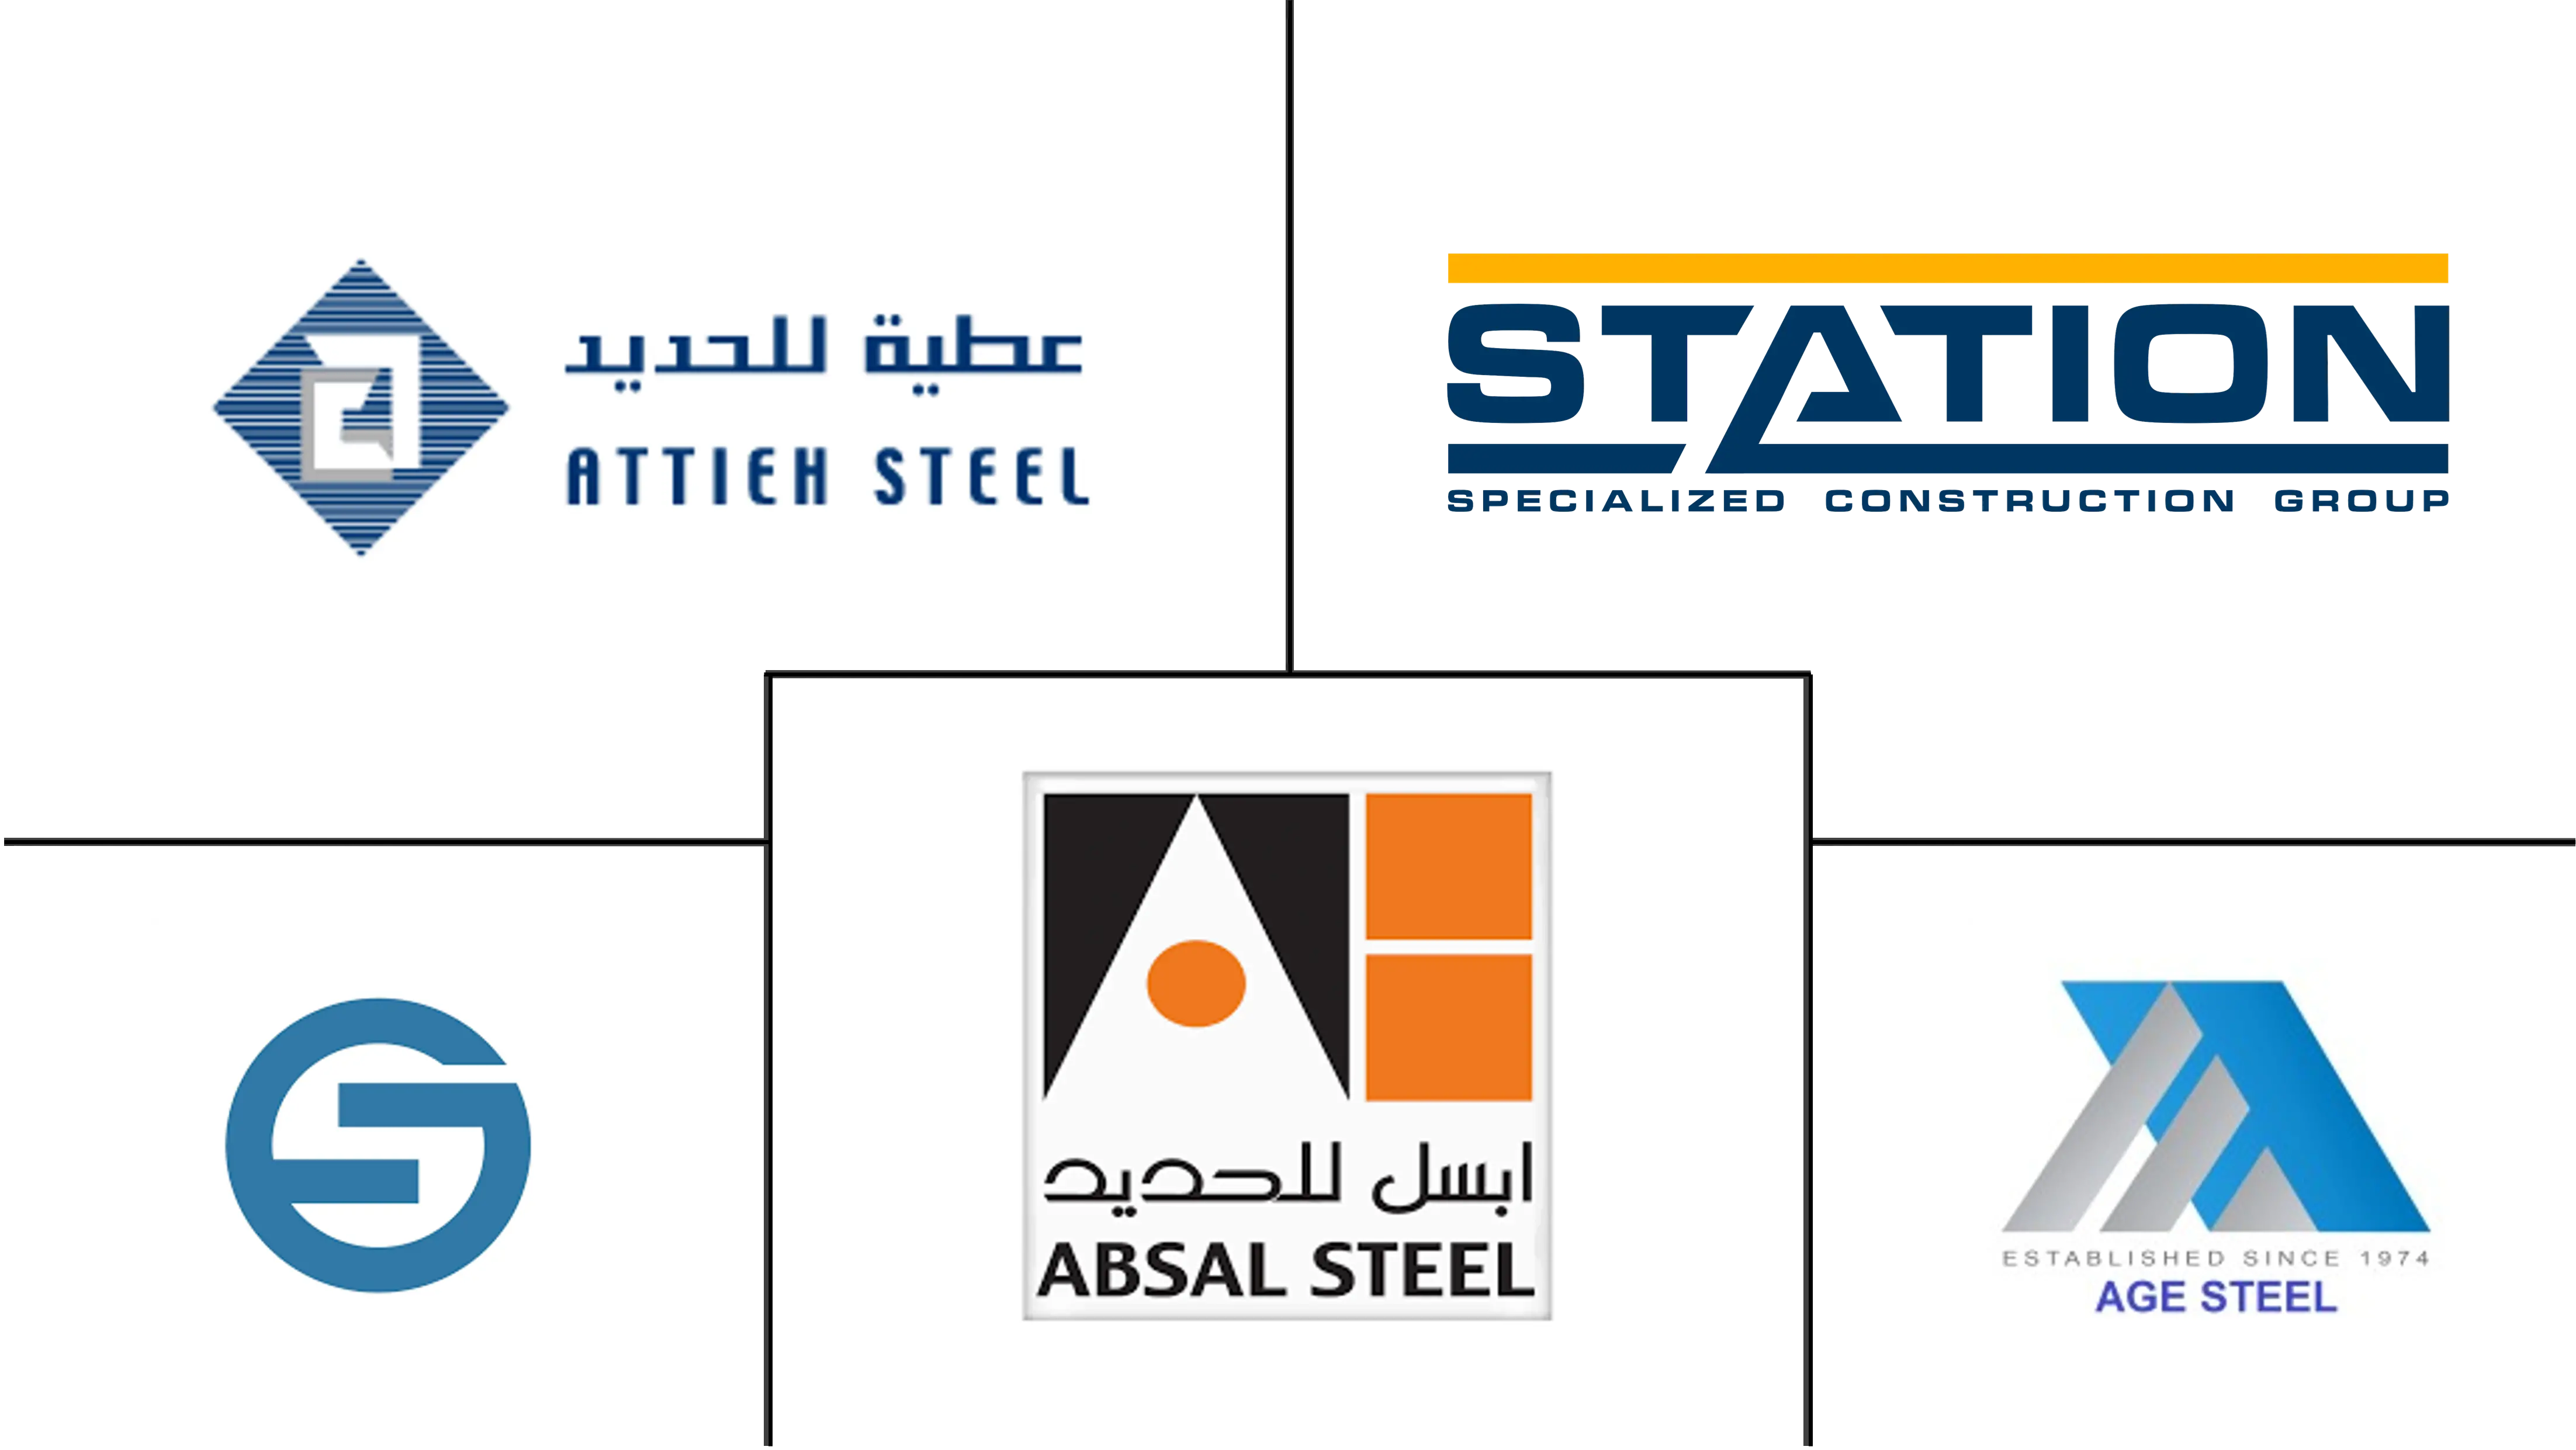 Saudi Arabia Structural Steel Fabrication Market Major Players